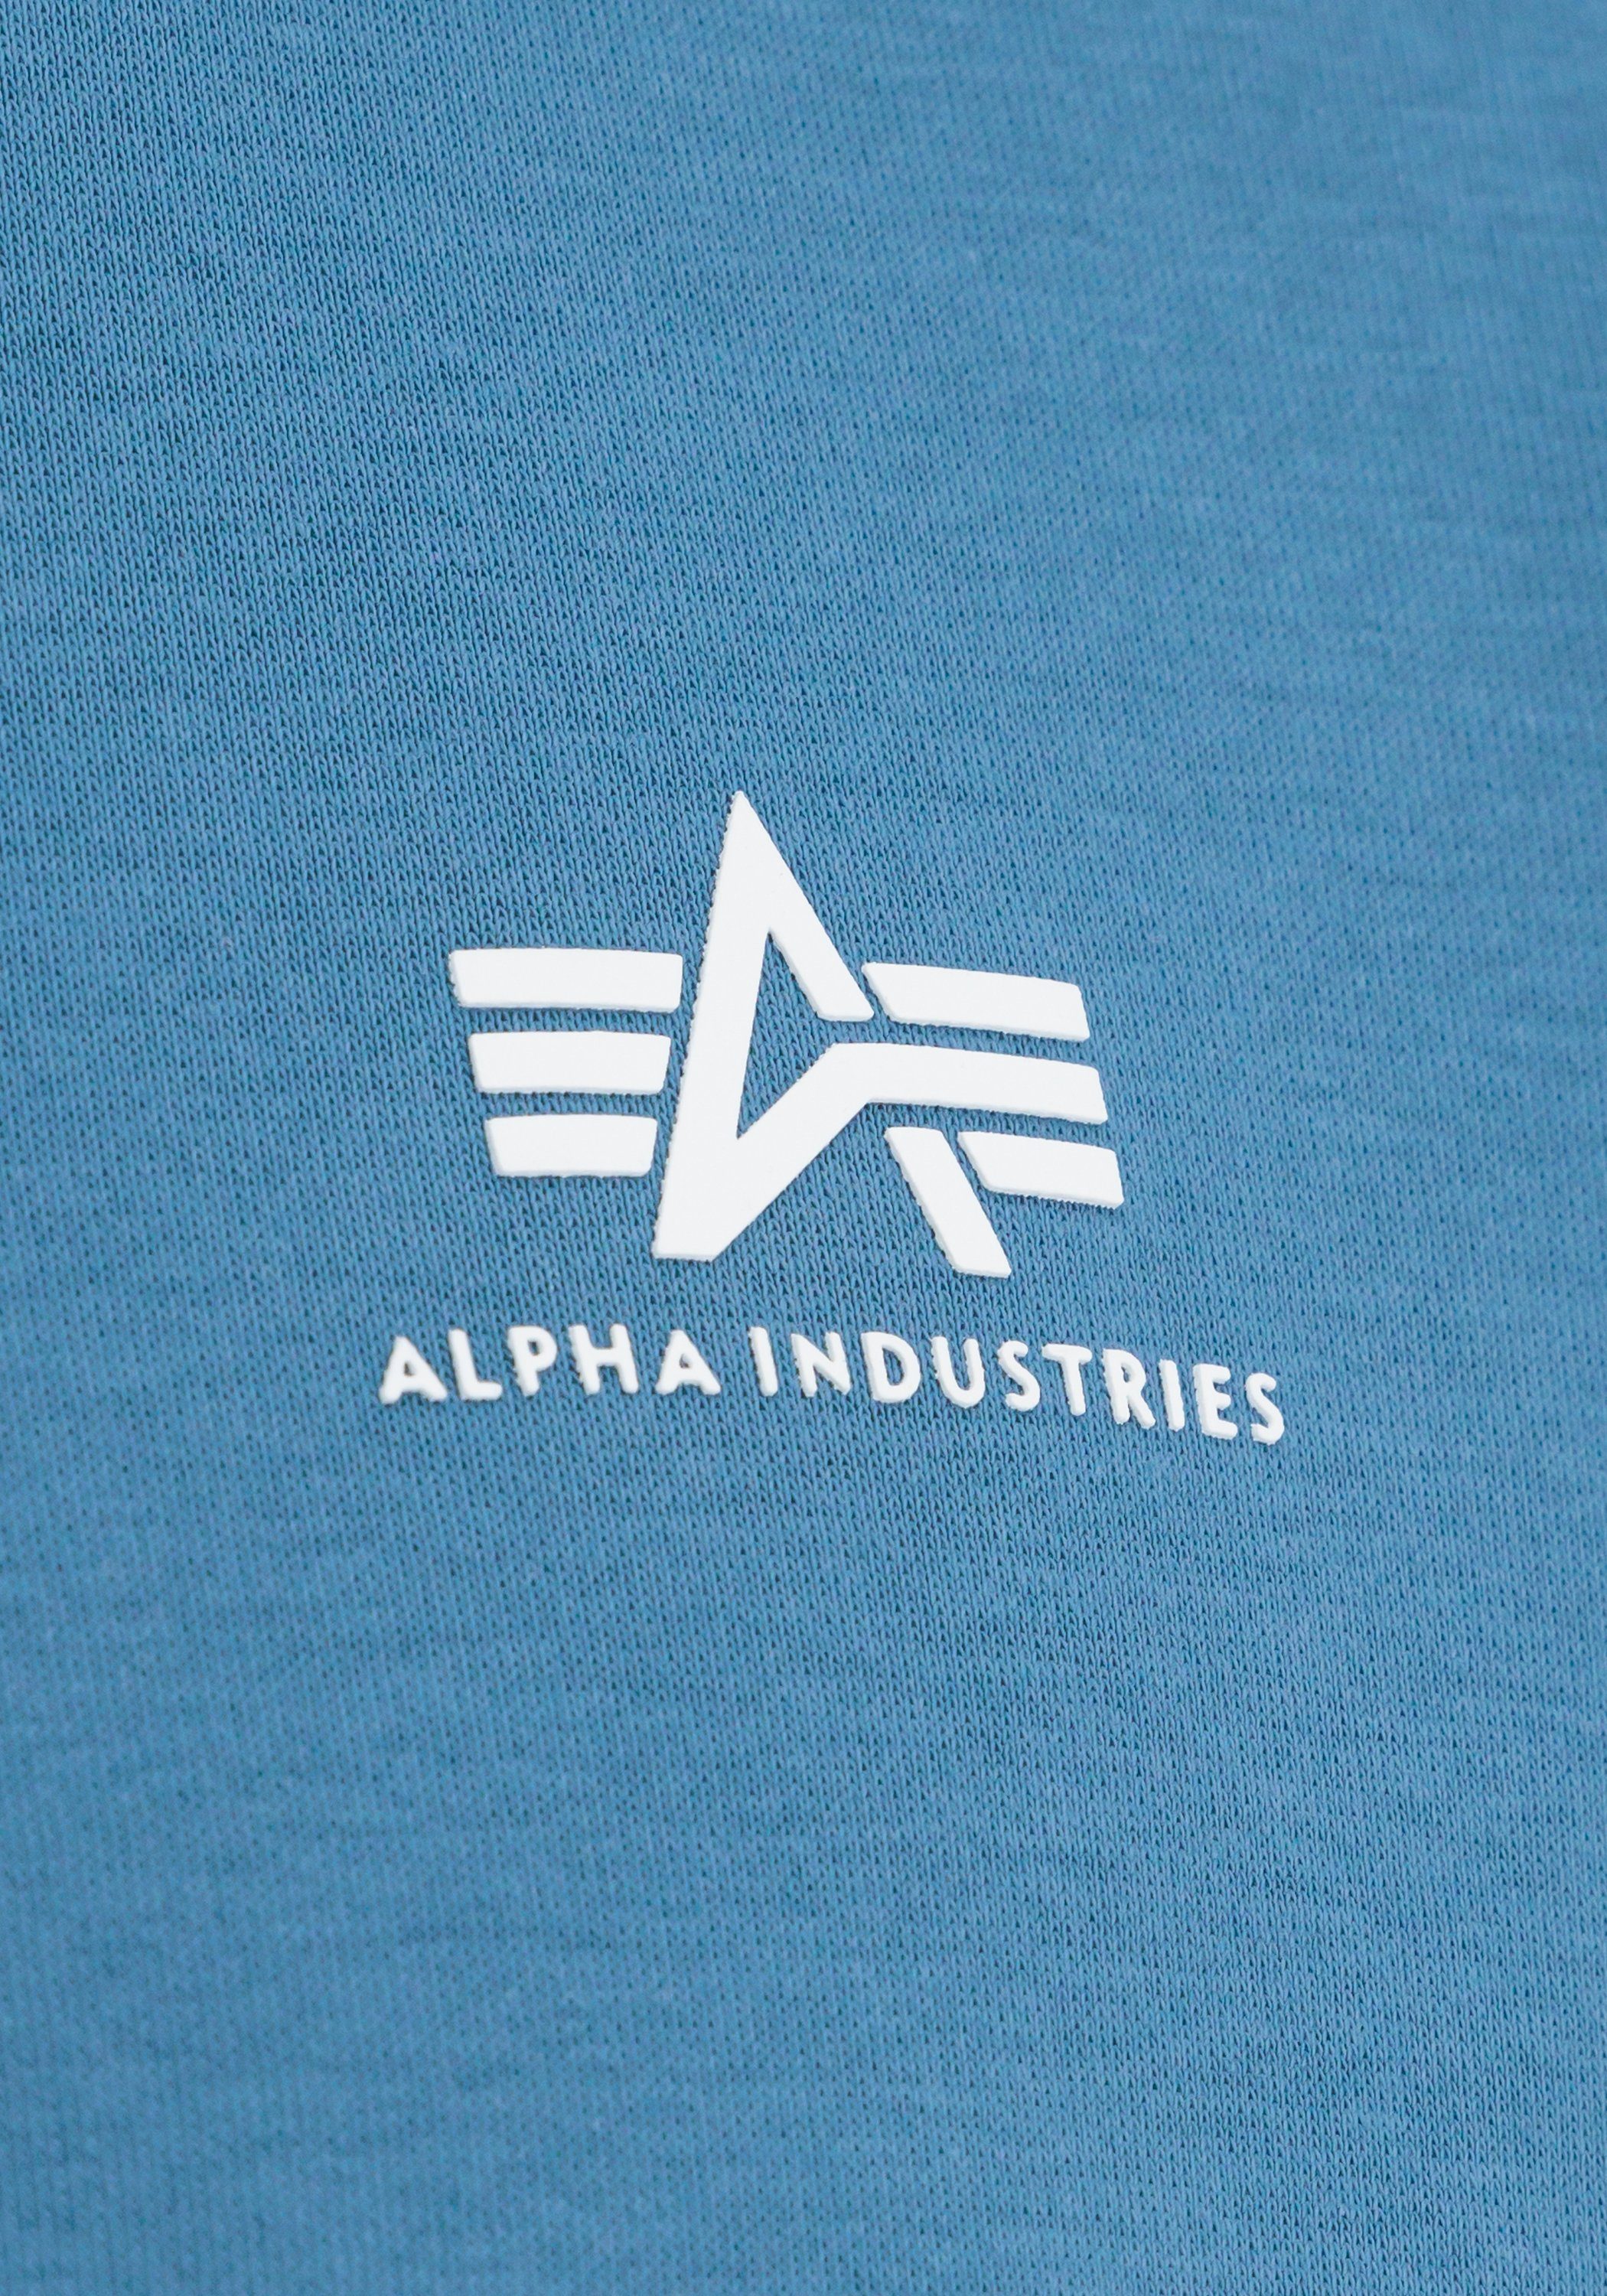 Sweatshirts Alpha Alpha Sweater Small Logo Industries Industries Basic Sweater - marine vintage Men